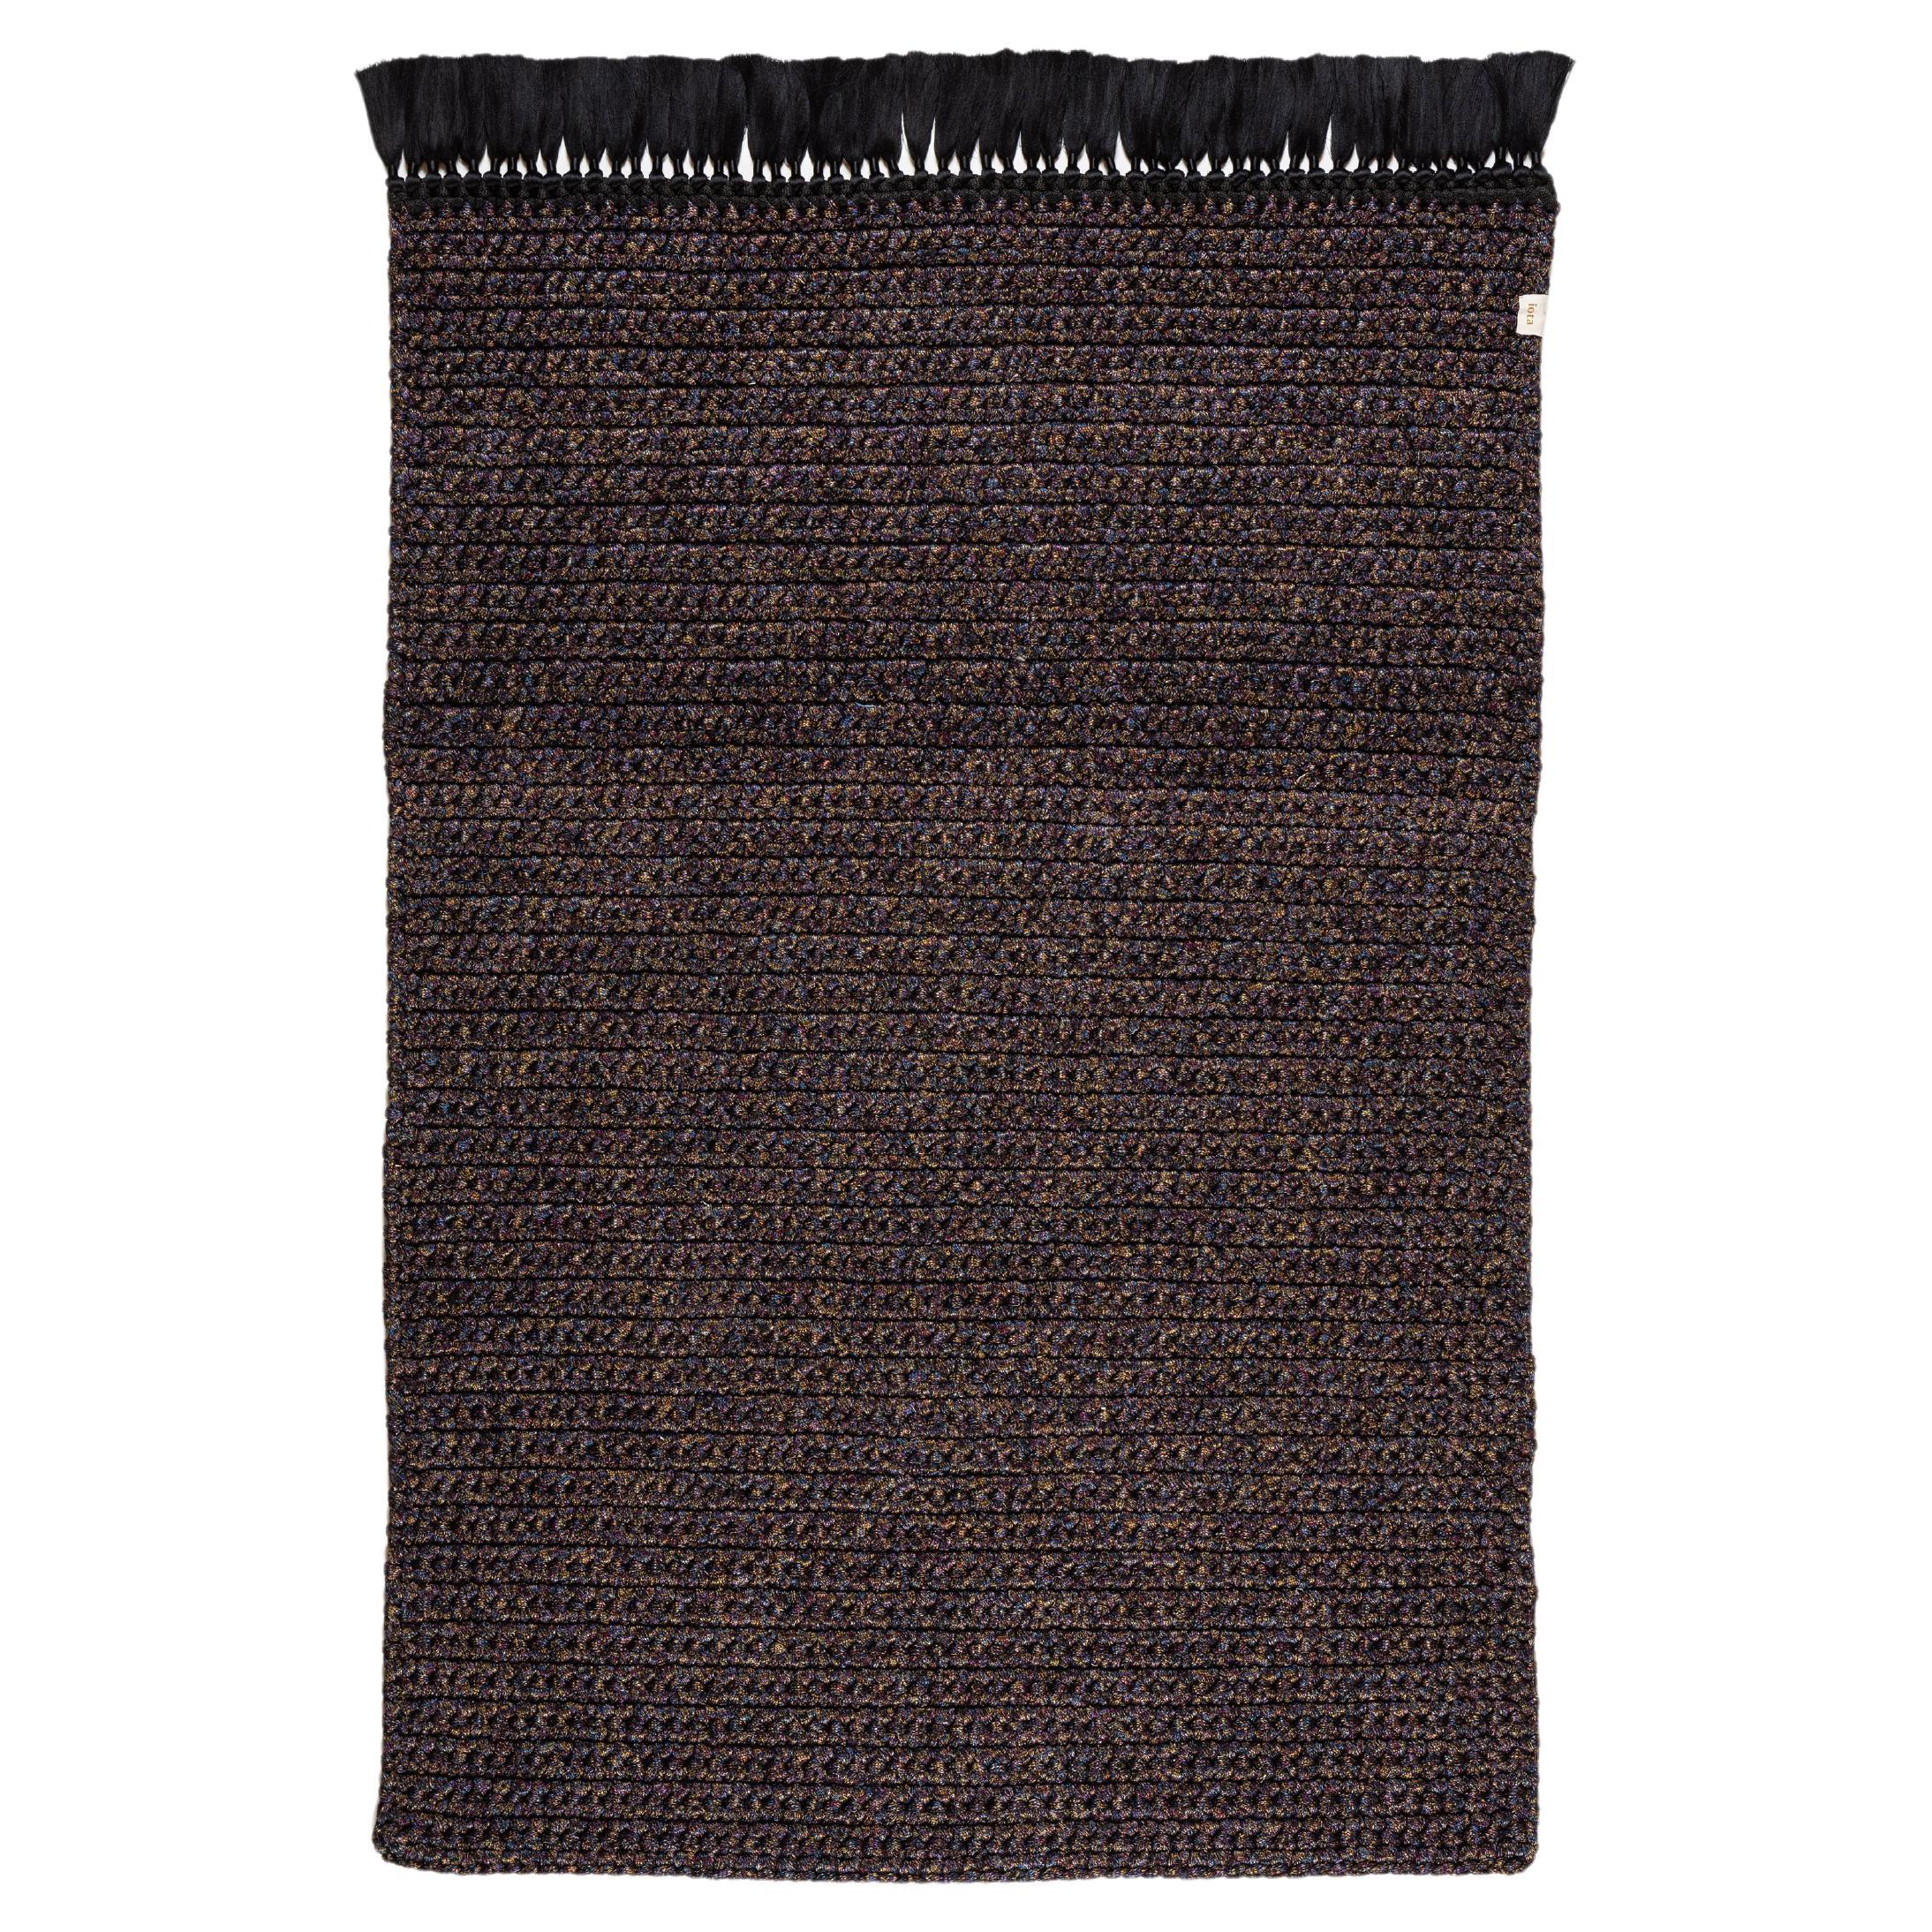 Thick Rug 120X200 cm  in Black Colorful Rust Handmade Crochet by iota